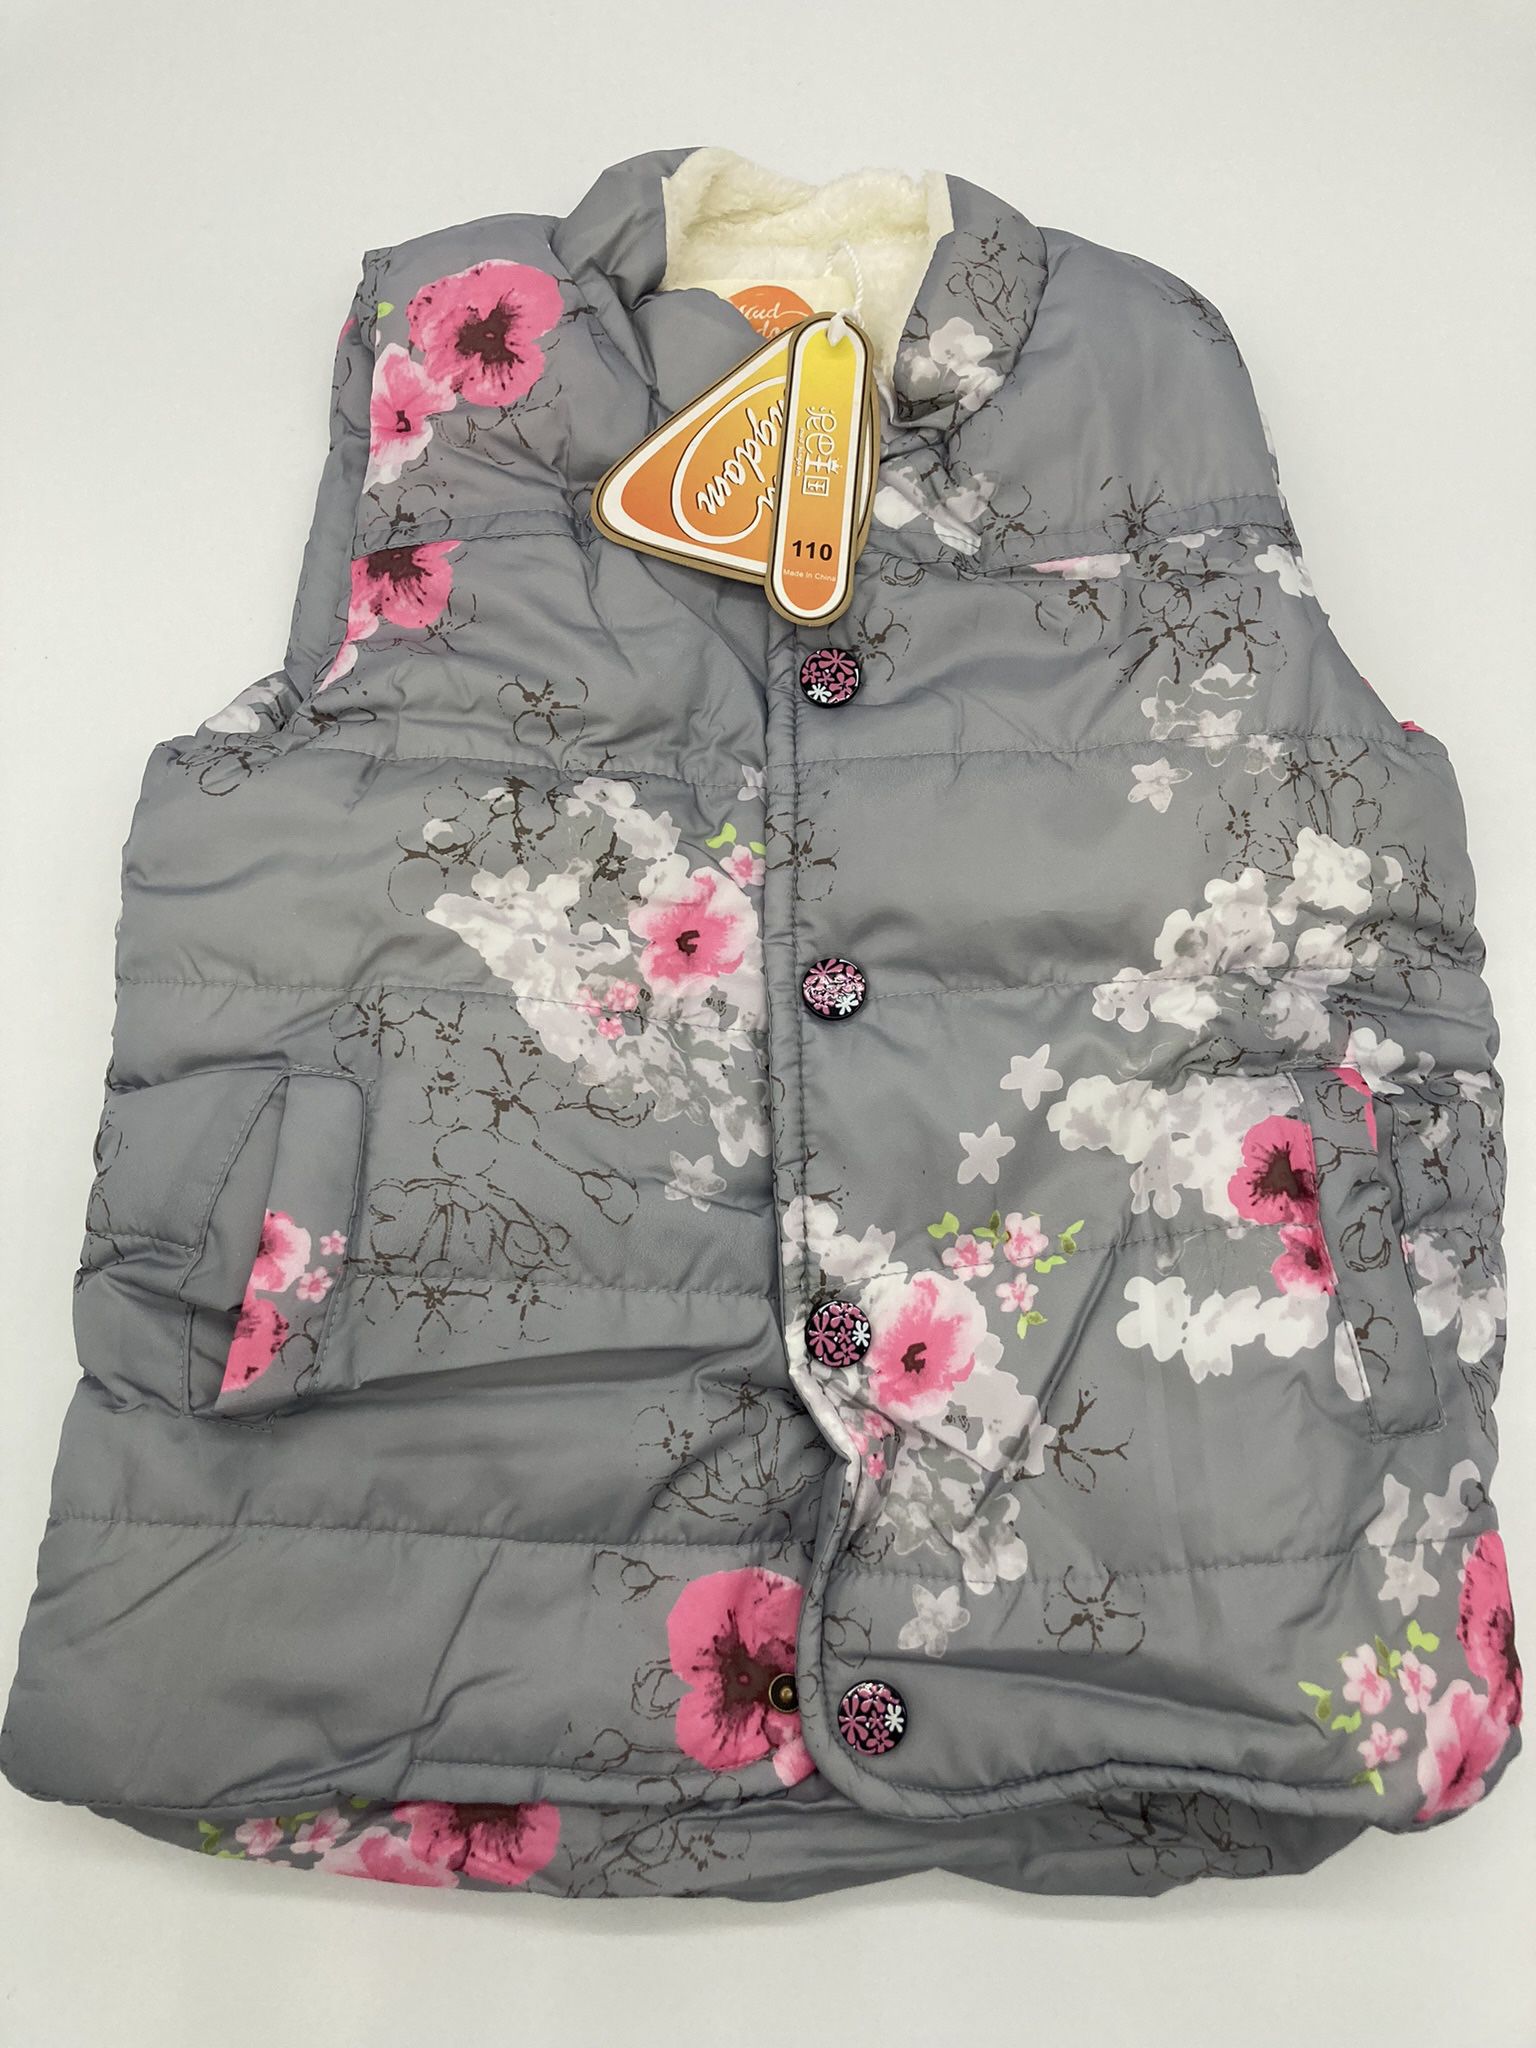 Floral Fleece Lined Puffer Vest for Girls, 4T *BRAND NEW*